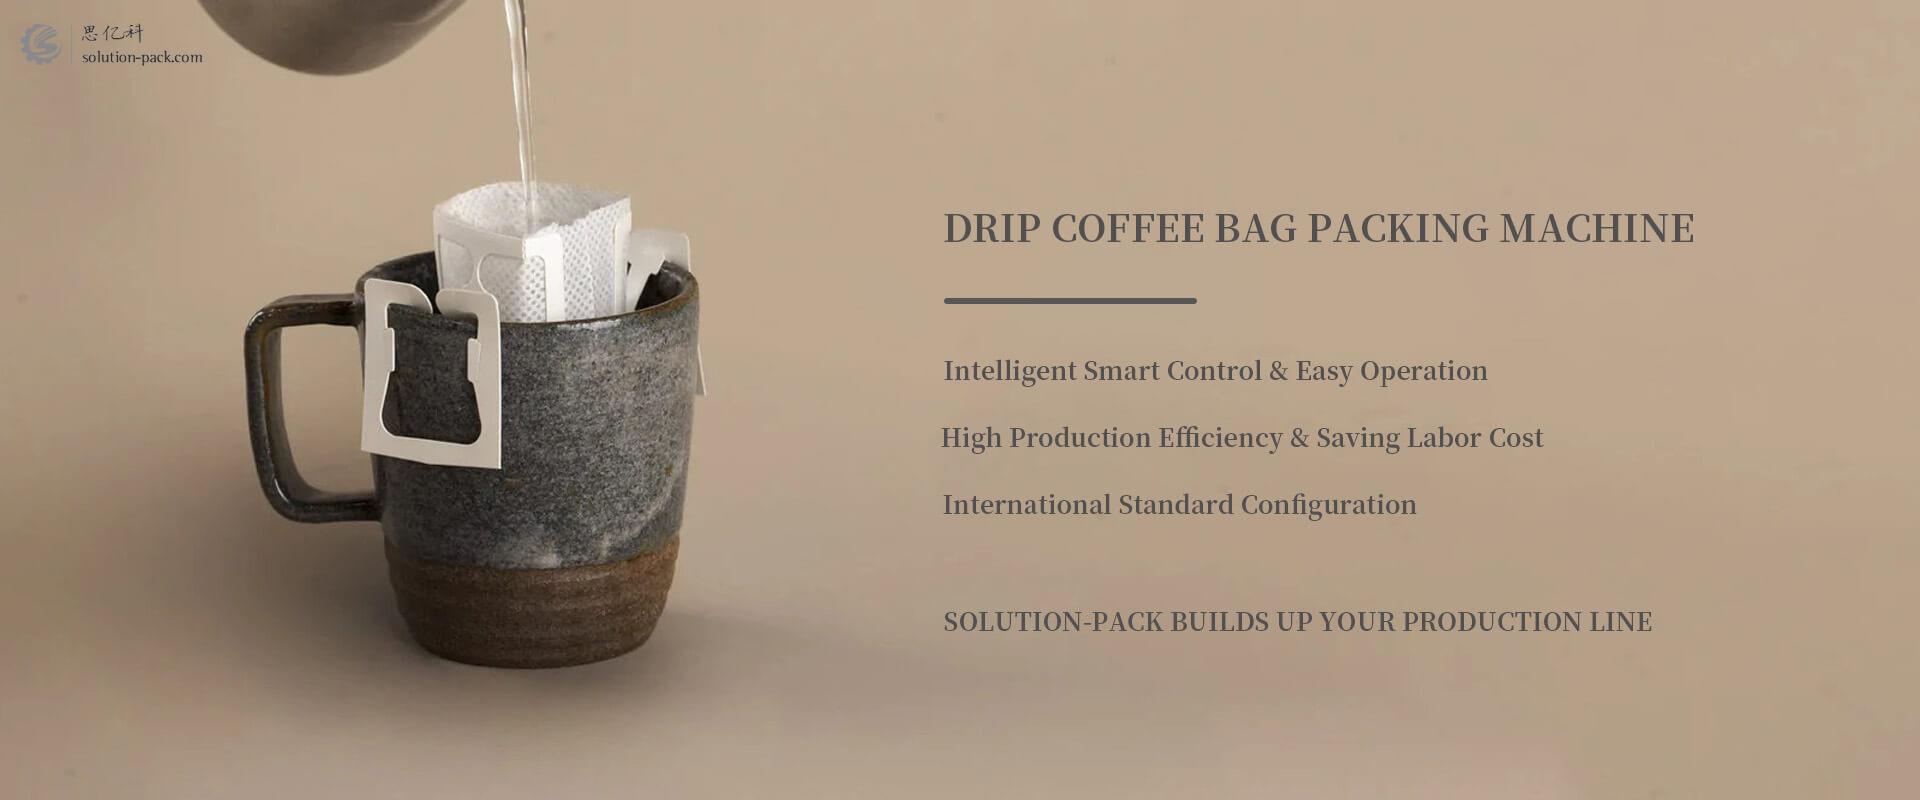 Solution-Pack | Drip Coffee Packing Machine | Drip Coffee Bag Packaging Machine